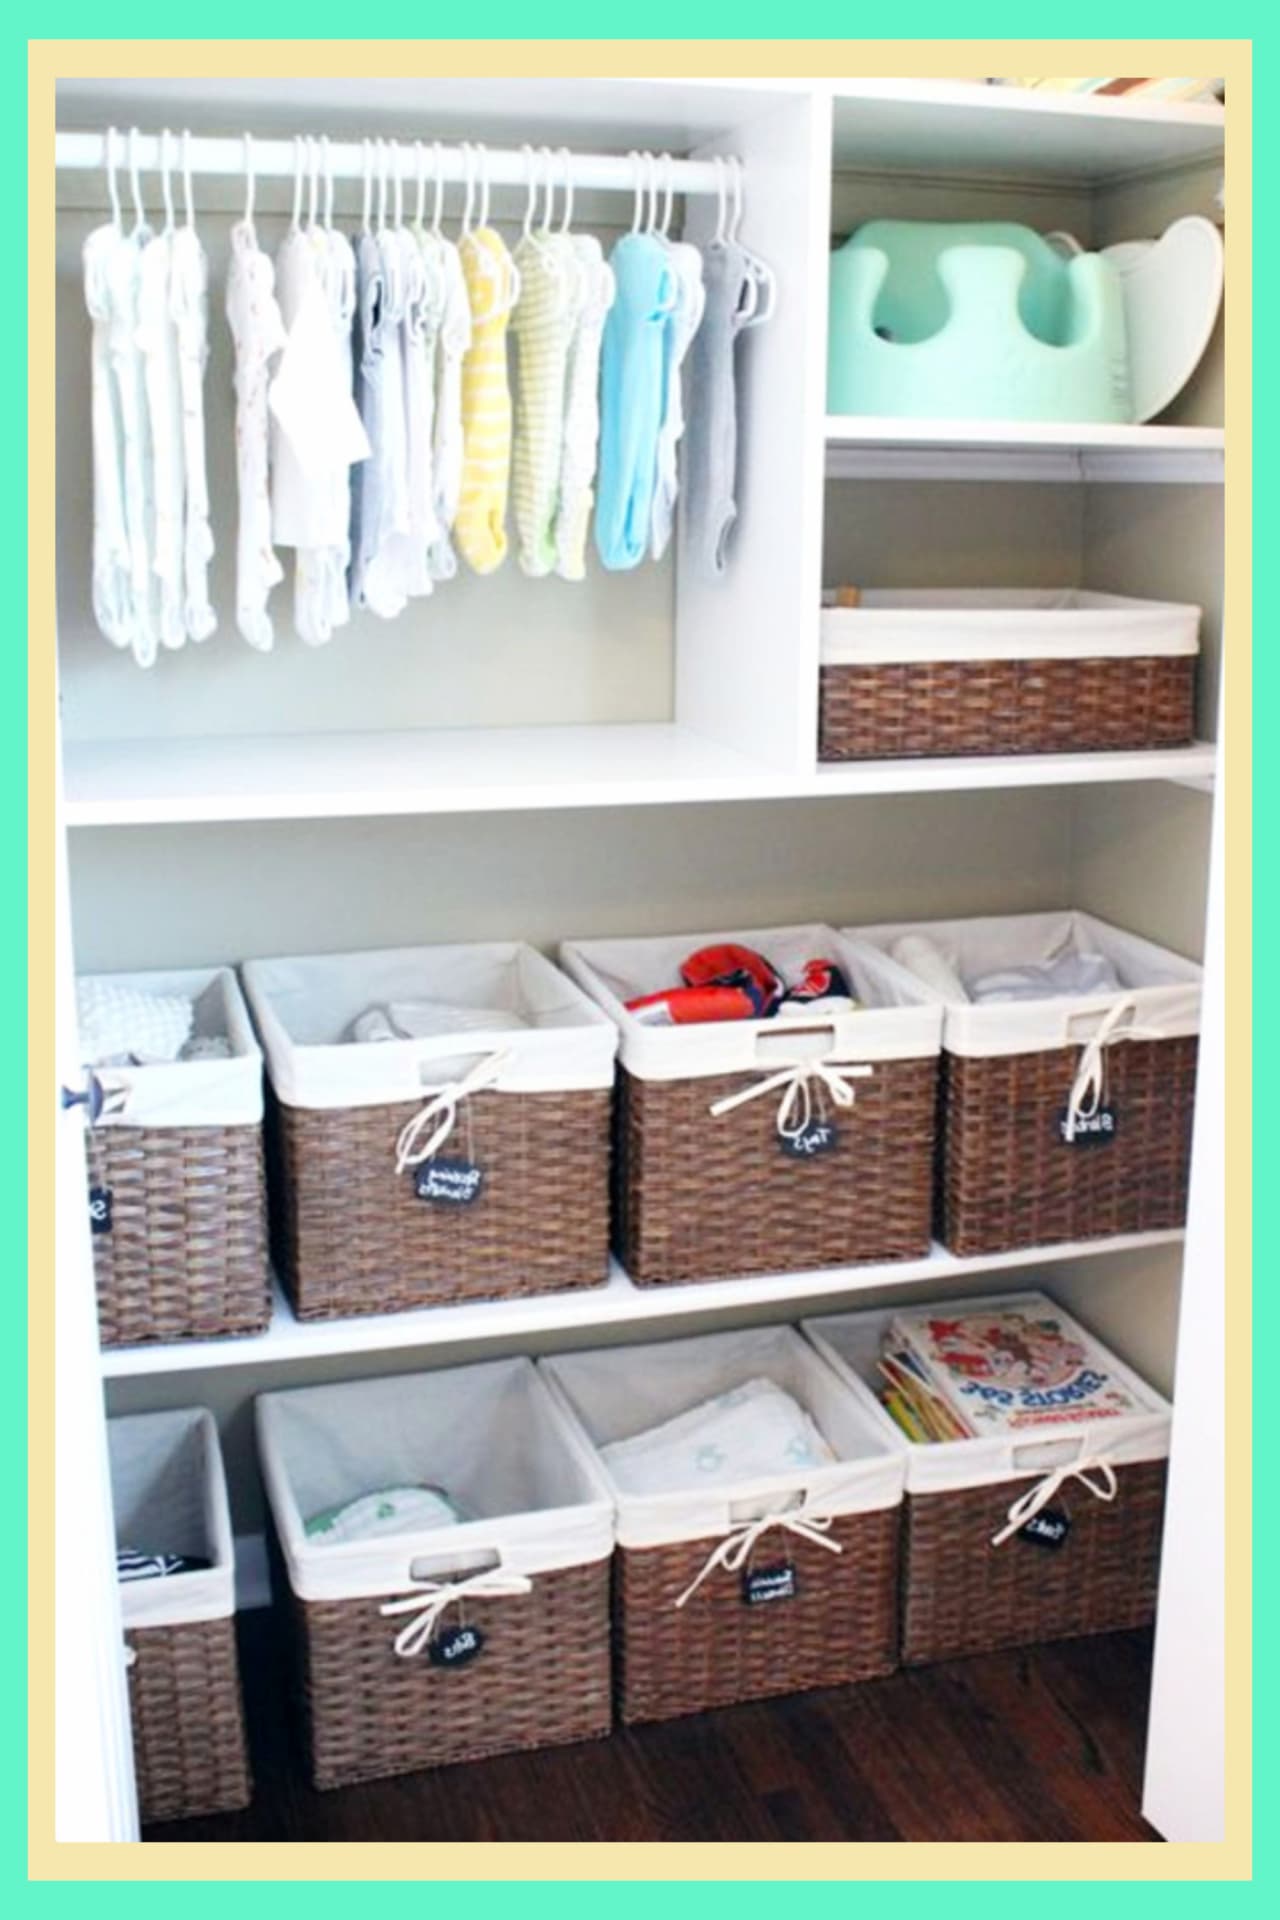 Nursery closet organization on a budget - space-saving closet organization ideas for the baby closet - organized gender neutral nursery closet